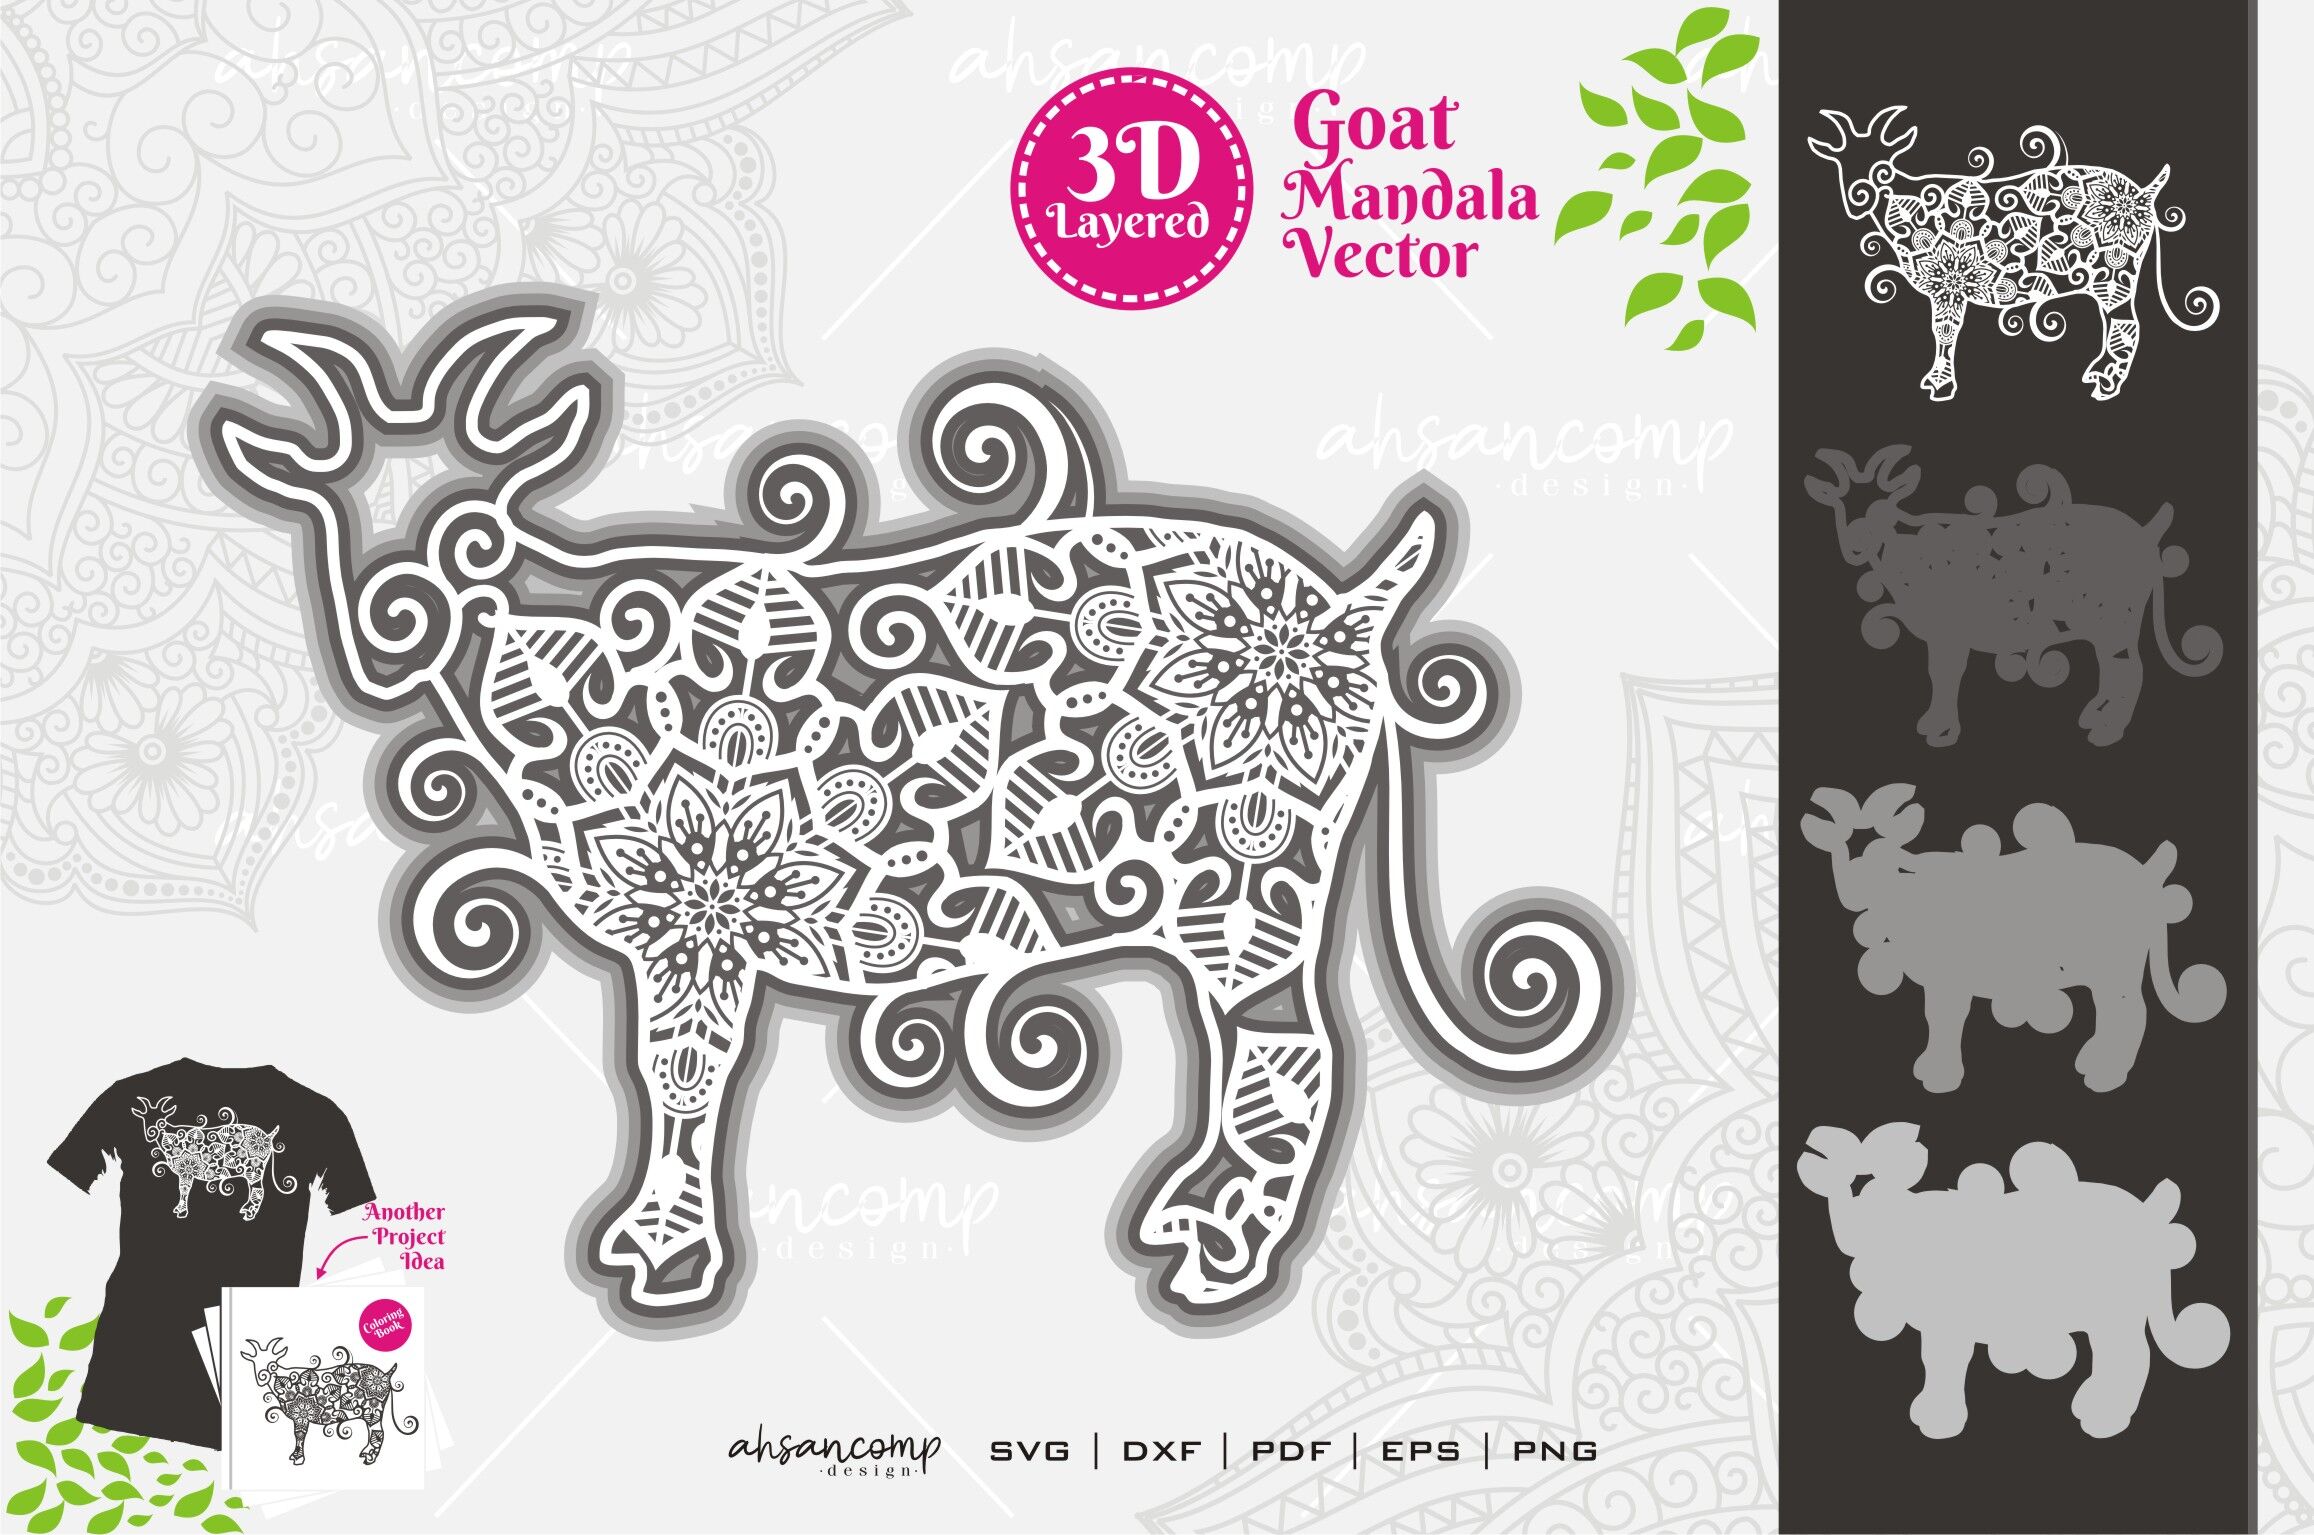 Download Goat Mandala Vector Svg 3d Layered 1 By Ahsancomp Studio Thehungryjpeg Com